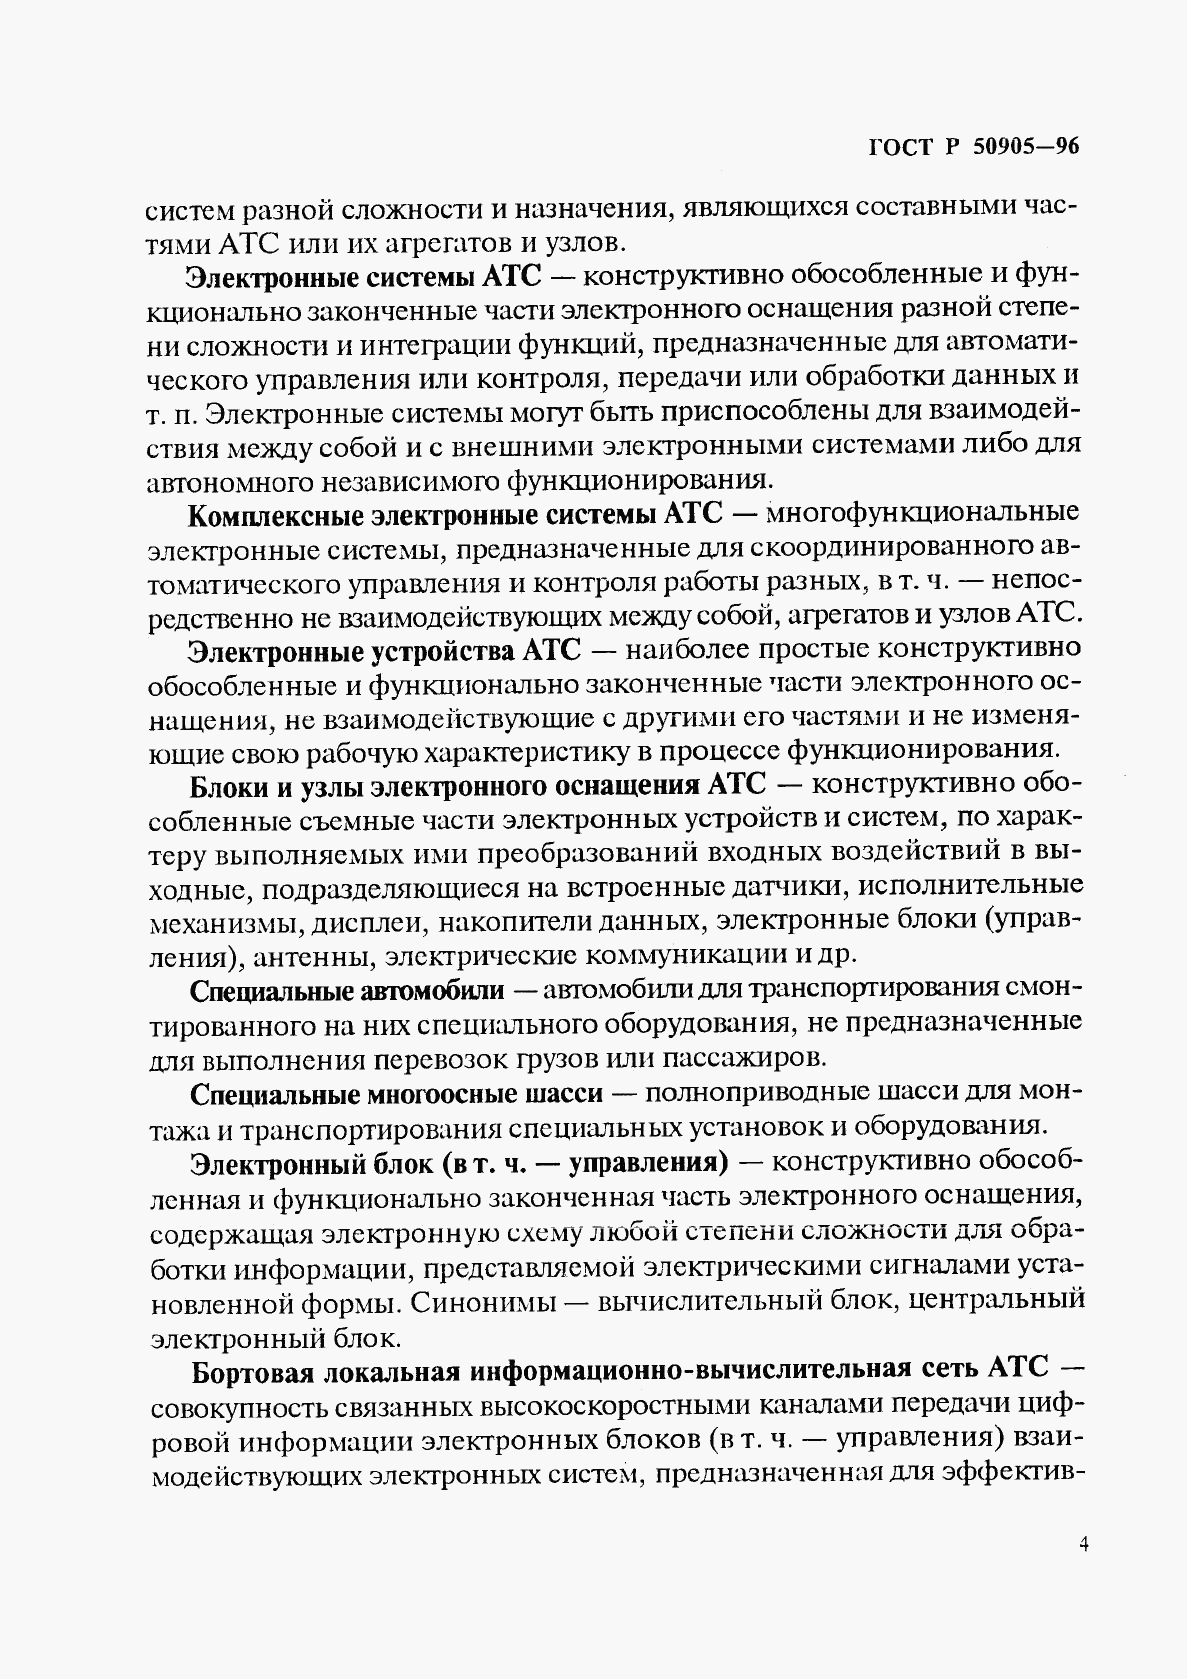 ГОСТ Р 50905-96, страница 7